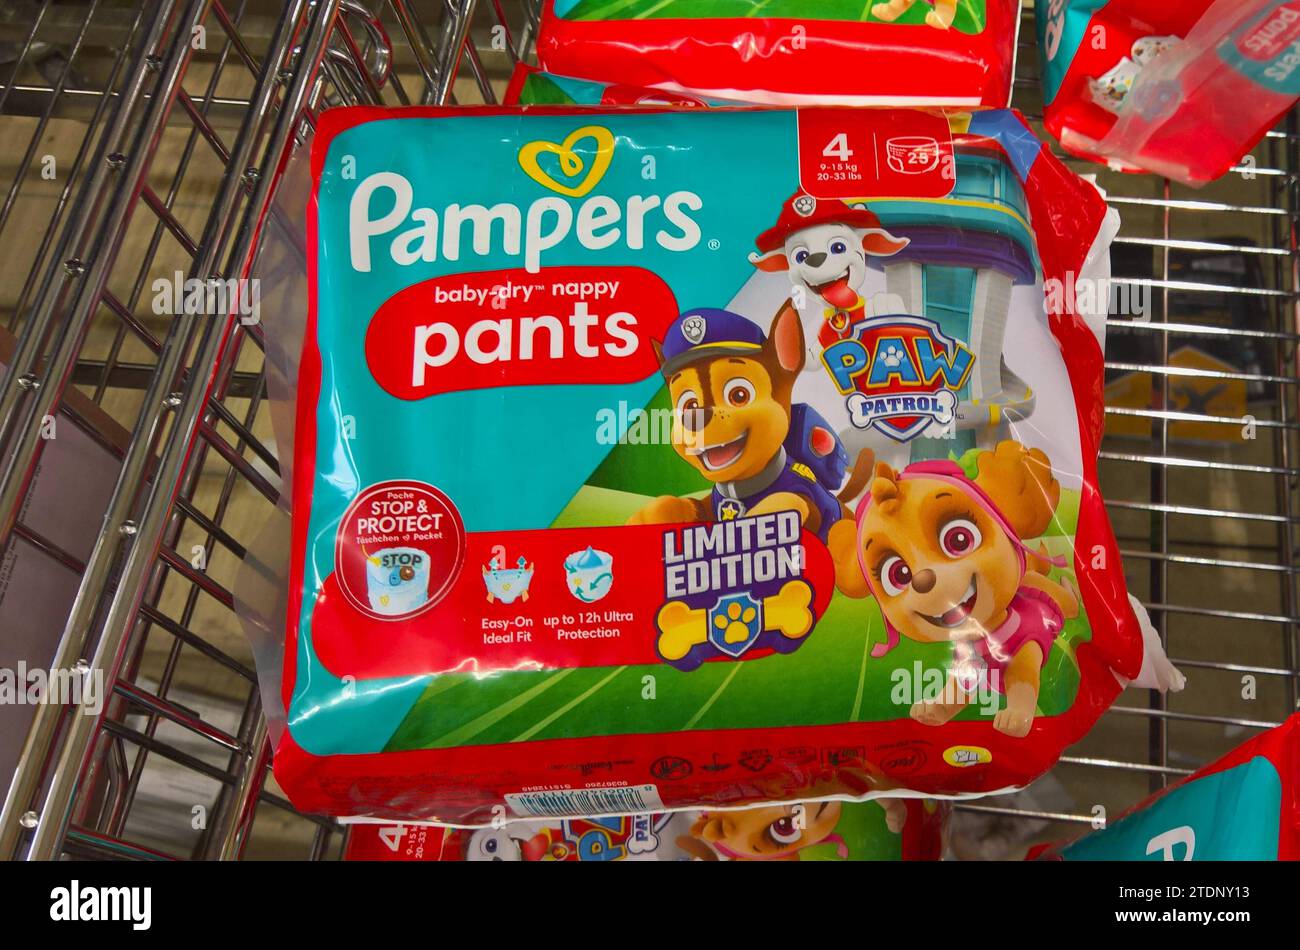 Pantalon Pampers Baby Dry Nappy - Taille 6 (15 + kg) - 84 pantalons